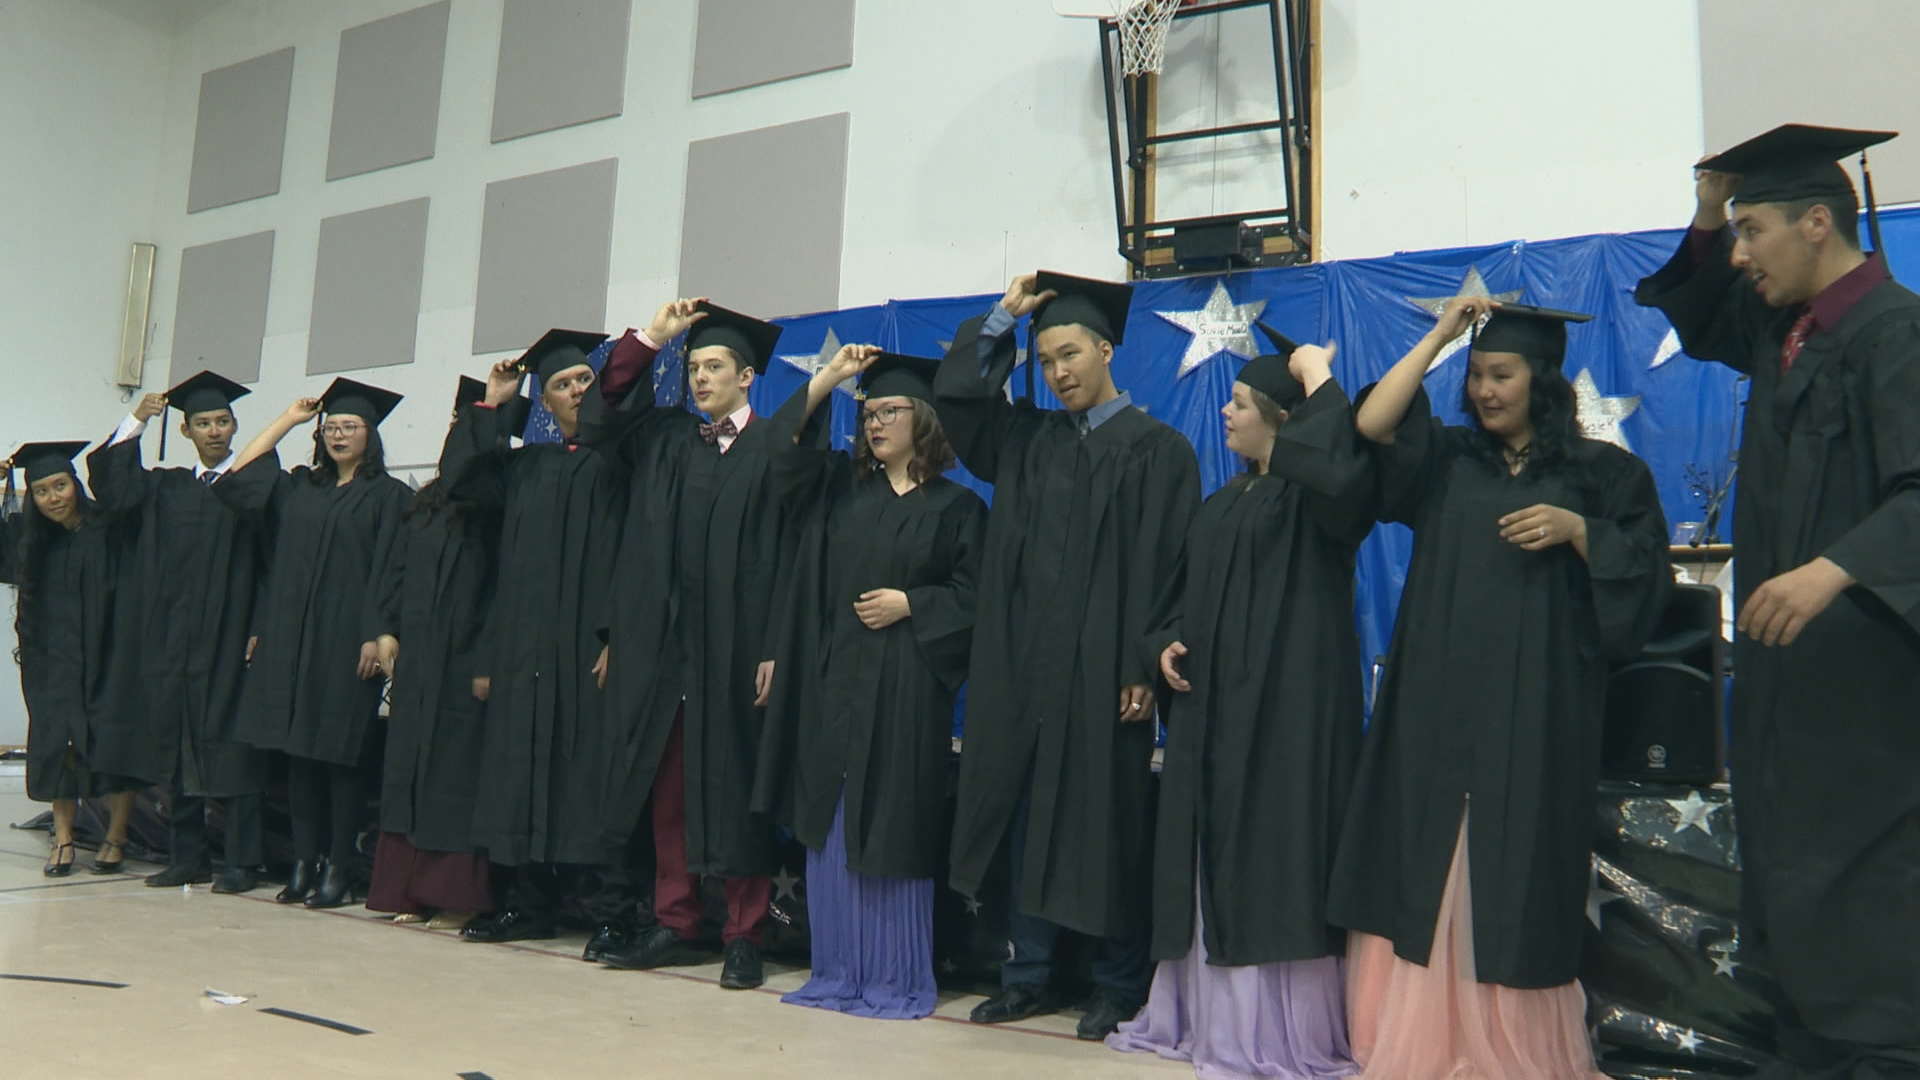 Kangirsujuaq High School Graduation